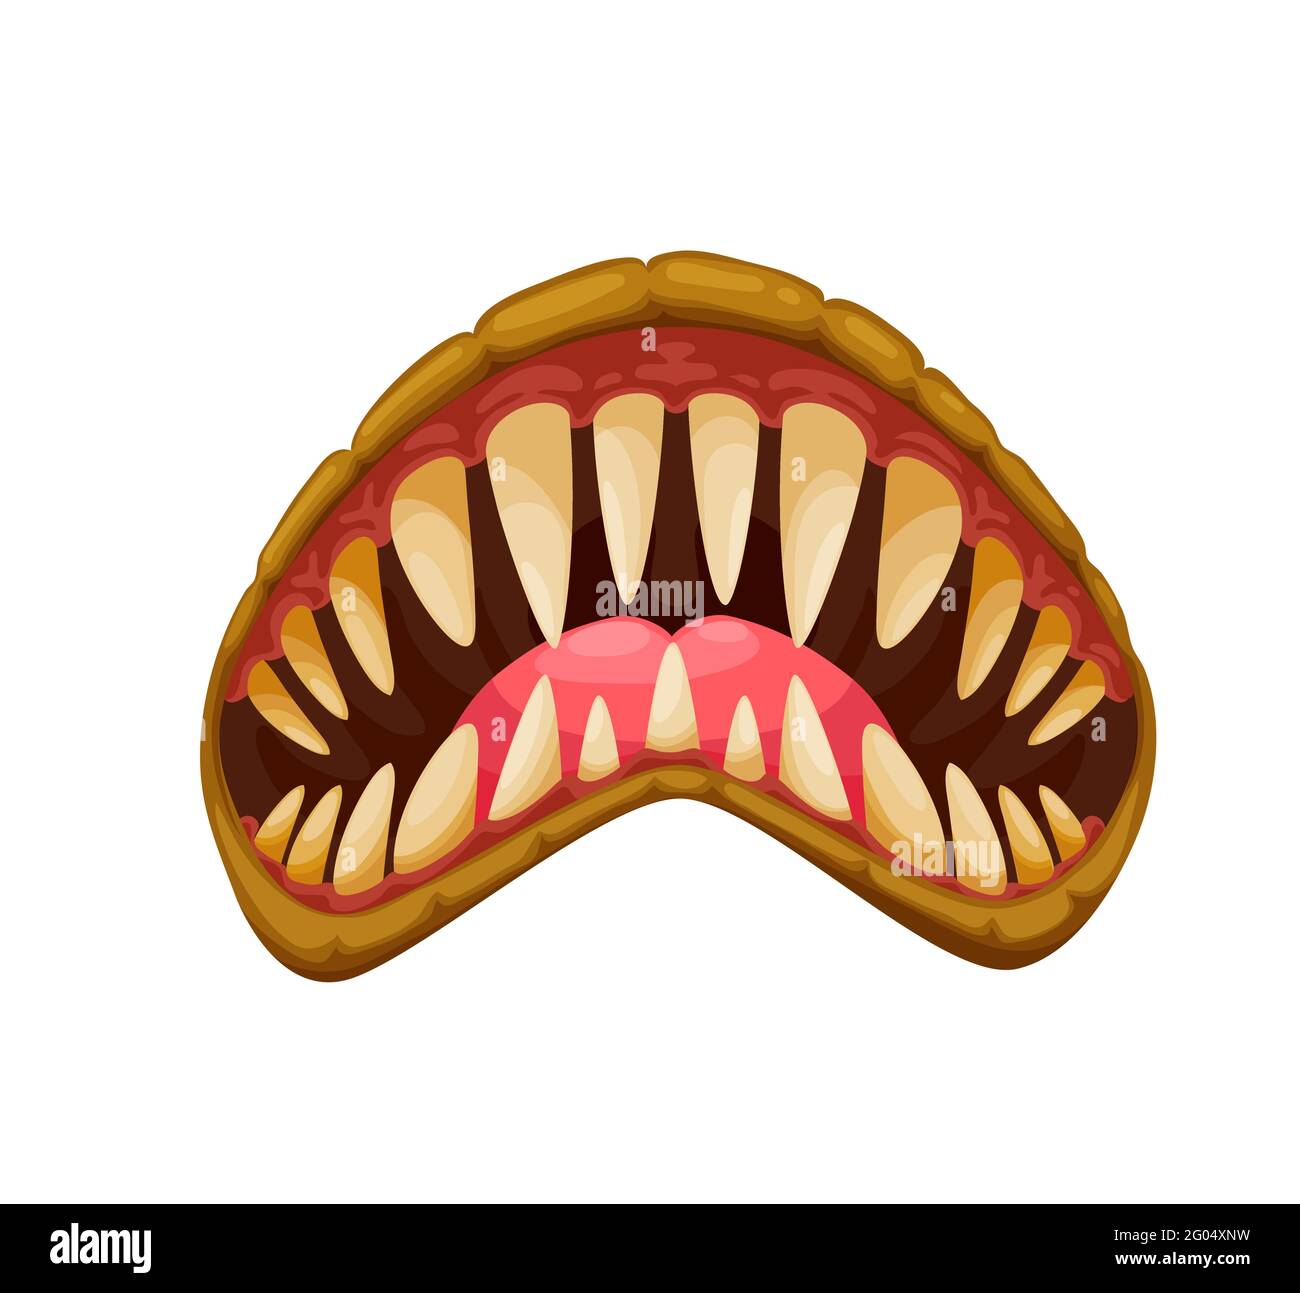 cartoon evil mouth